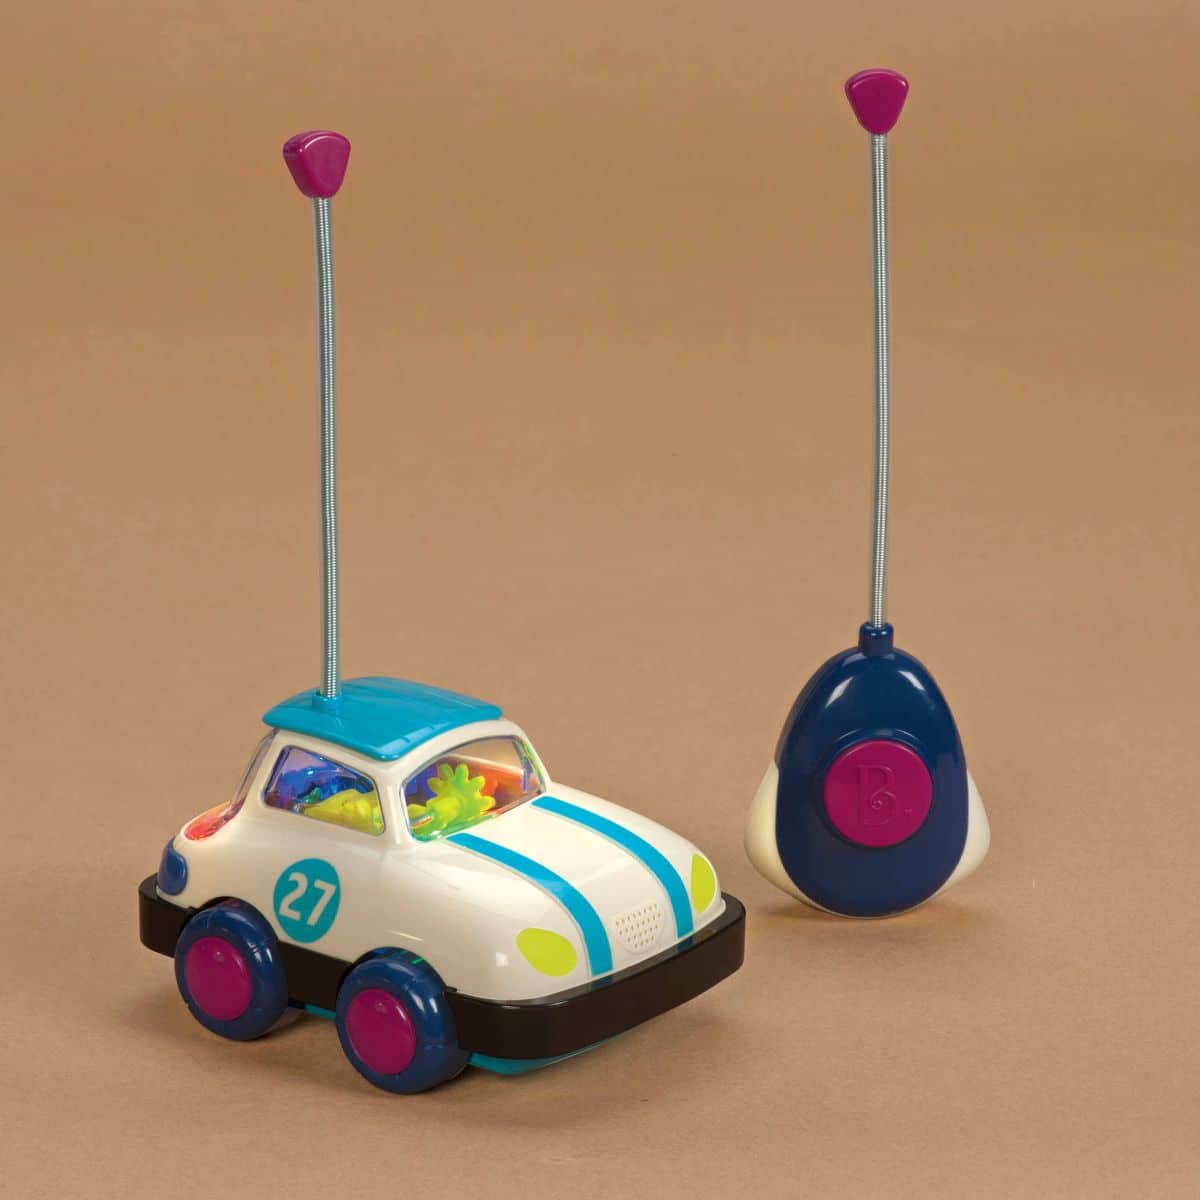 Remote control toy car